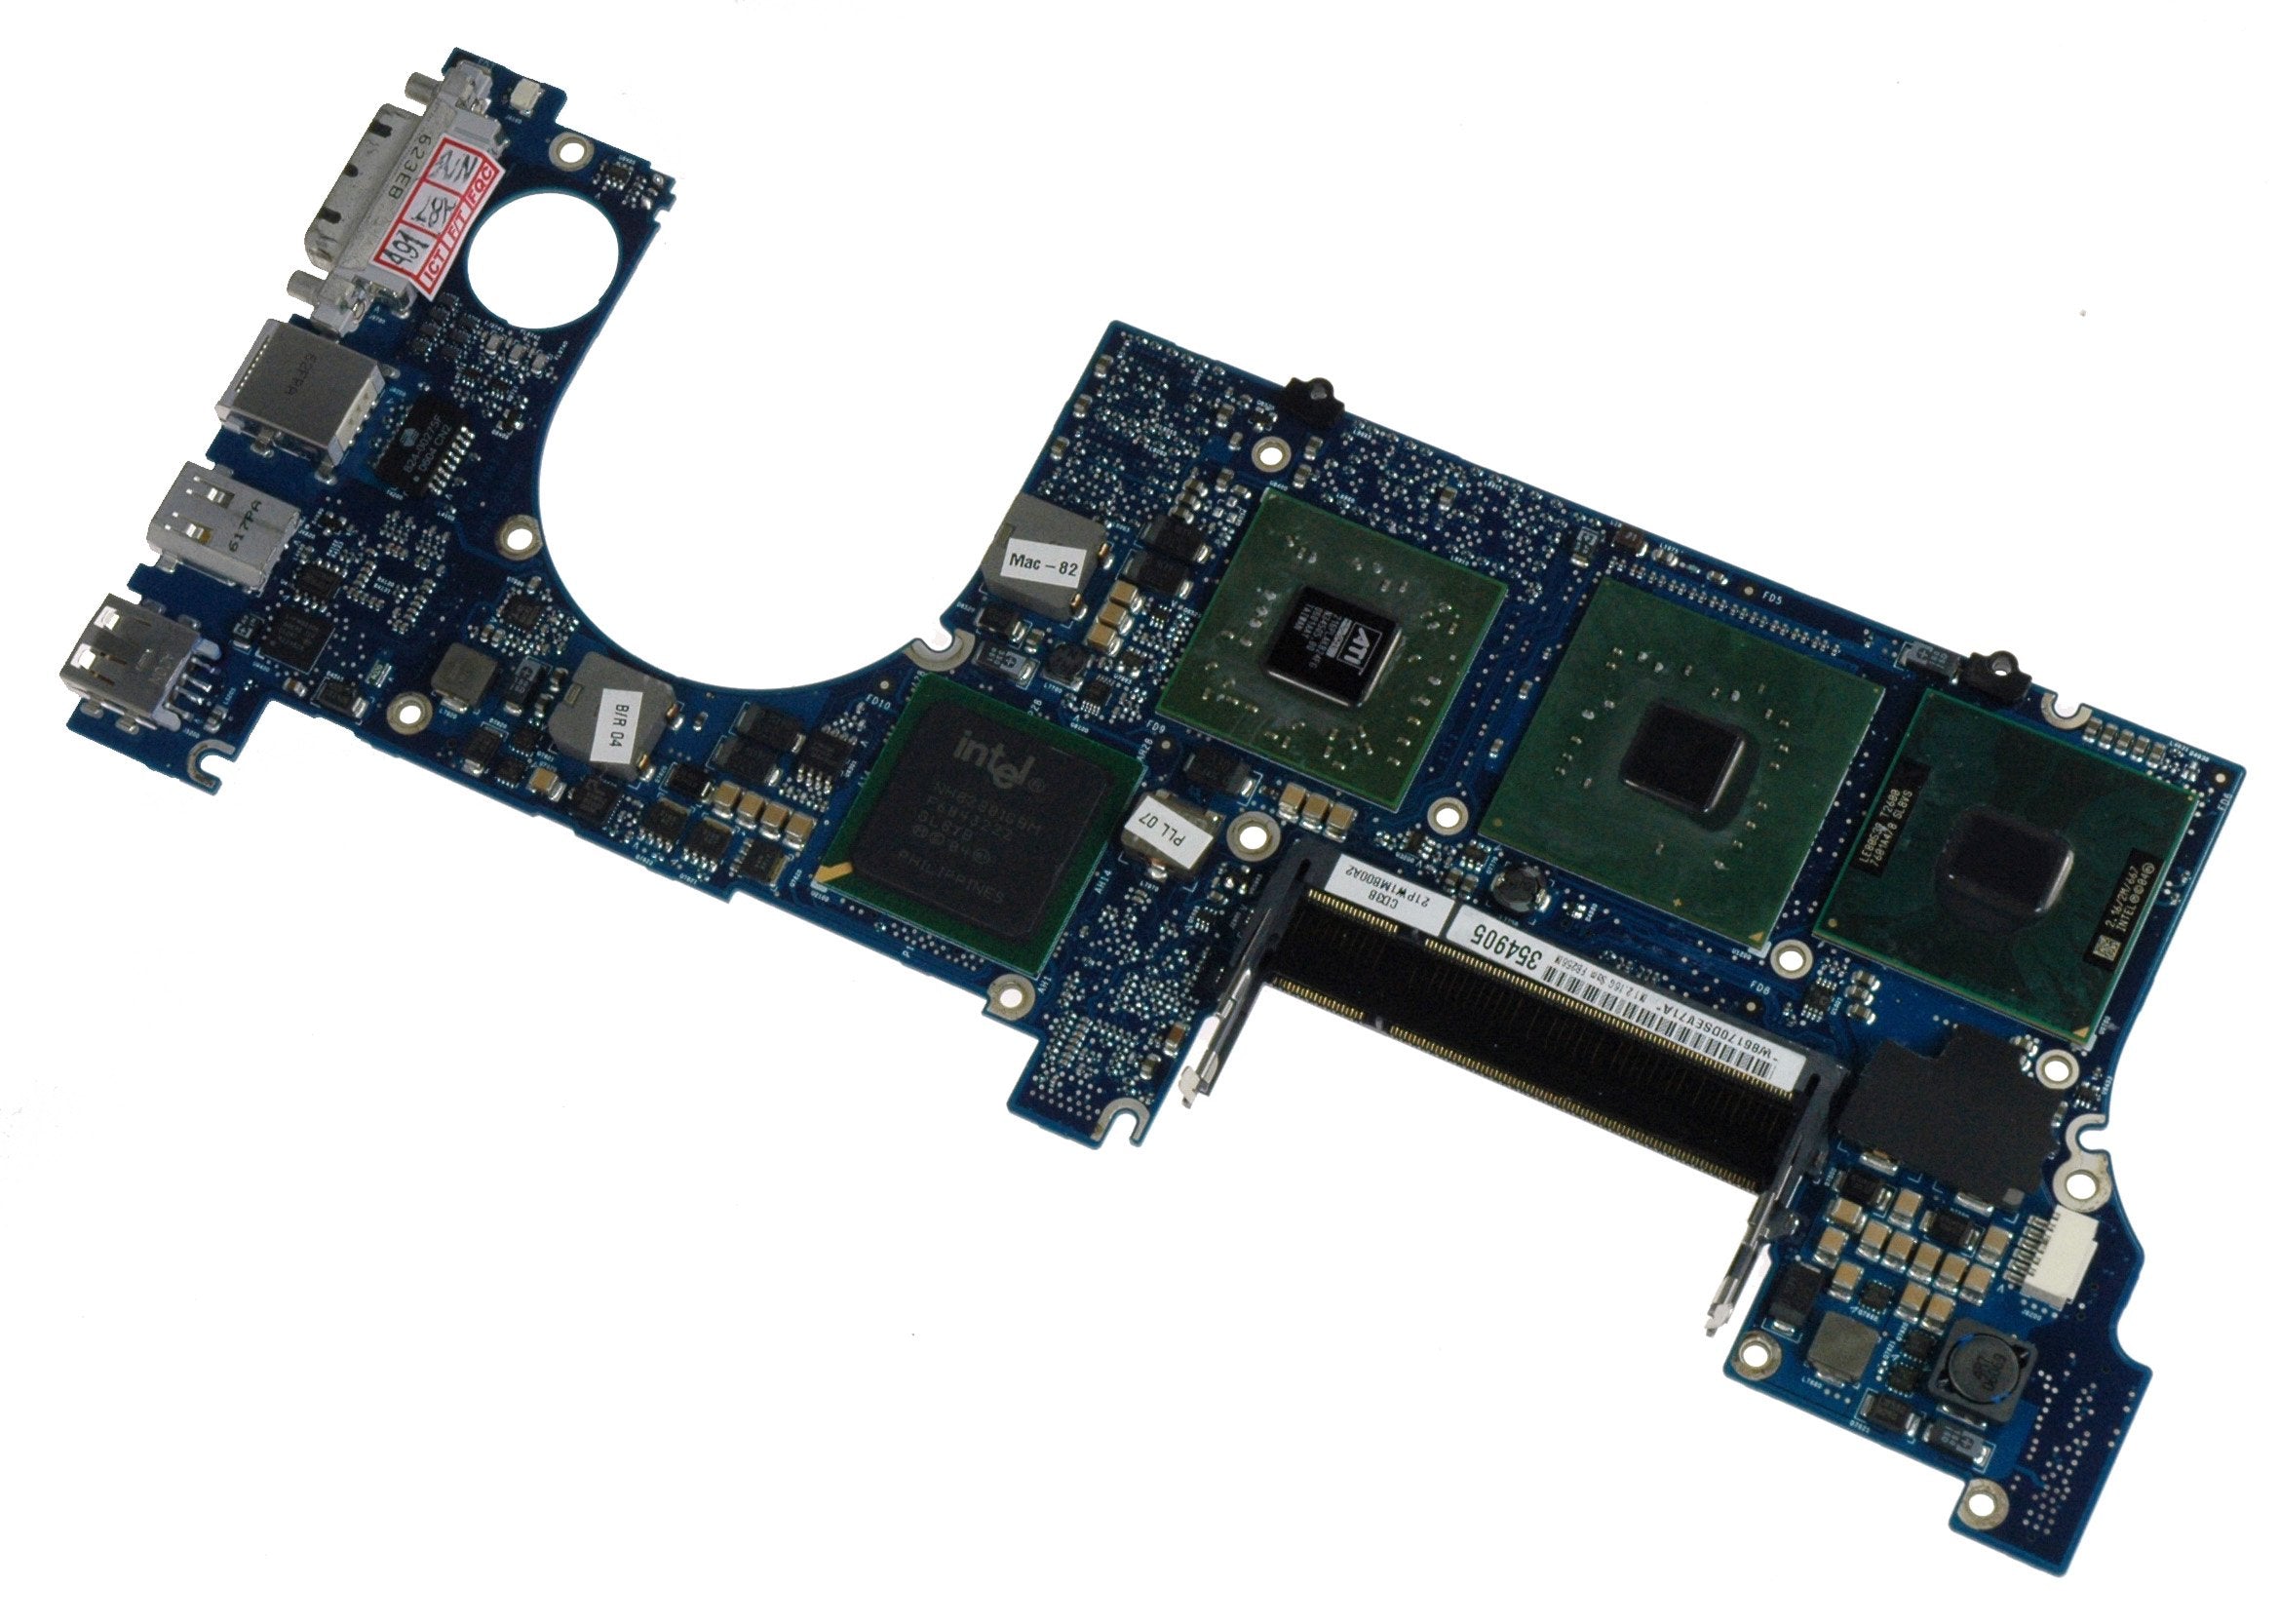 MacBook Pro 15" (Model A1150) 2.16 GHz Logic Board